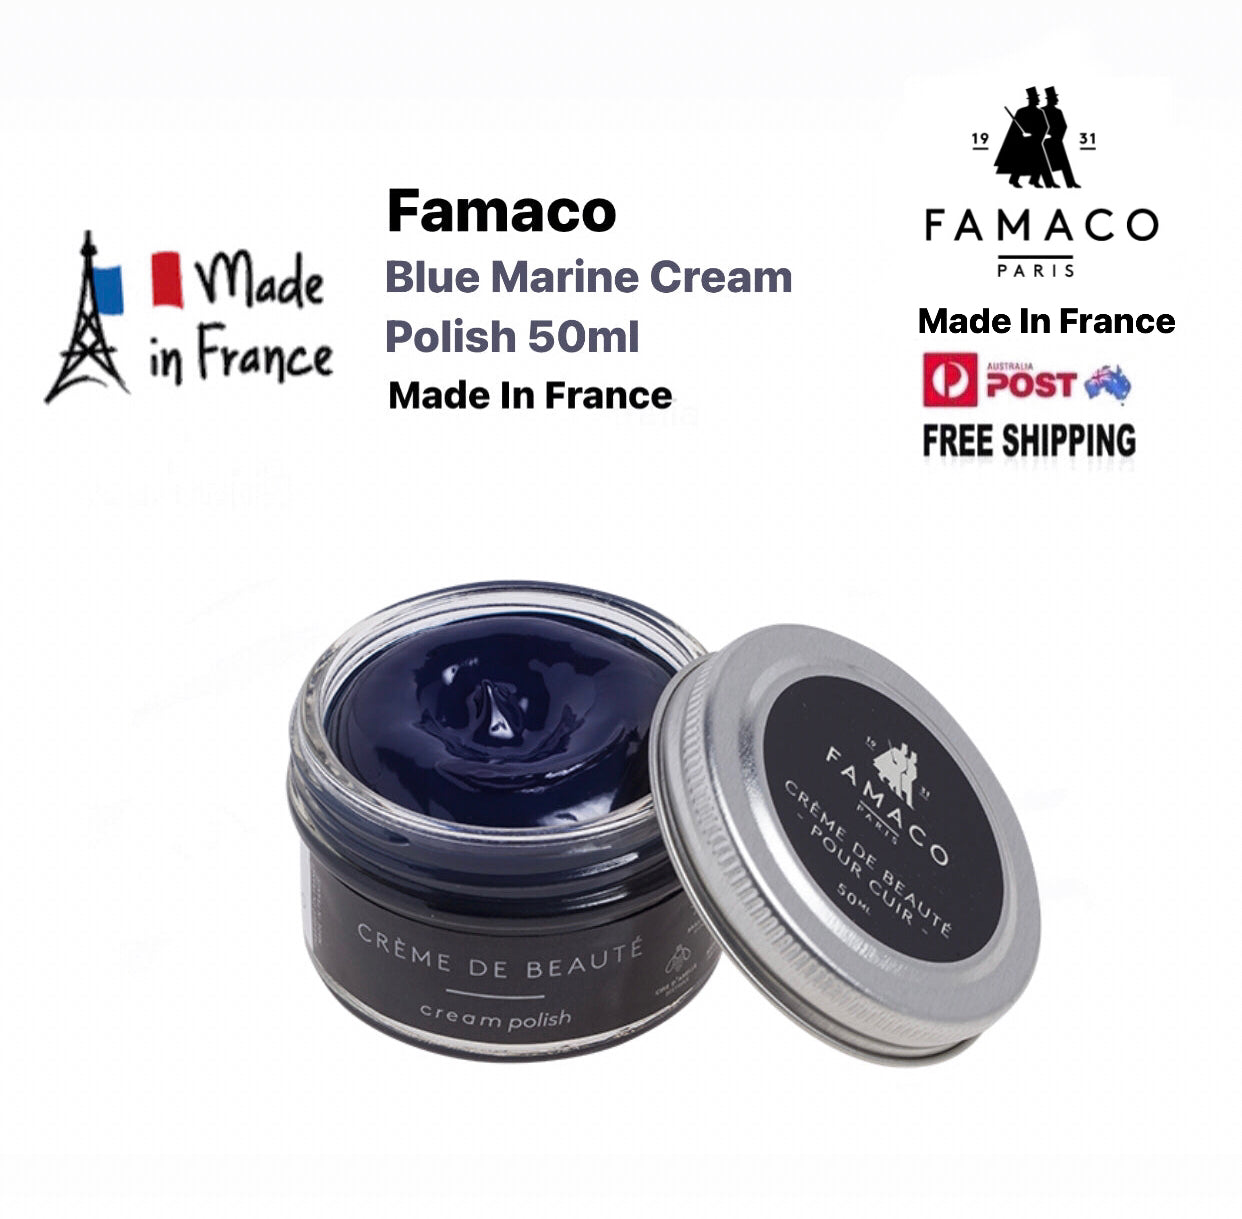 Famaco Blue Marine Cream Polish 50ml Made In France